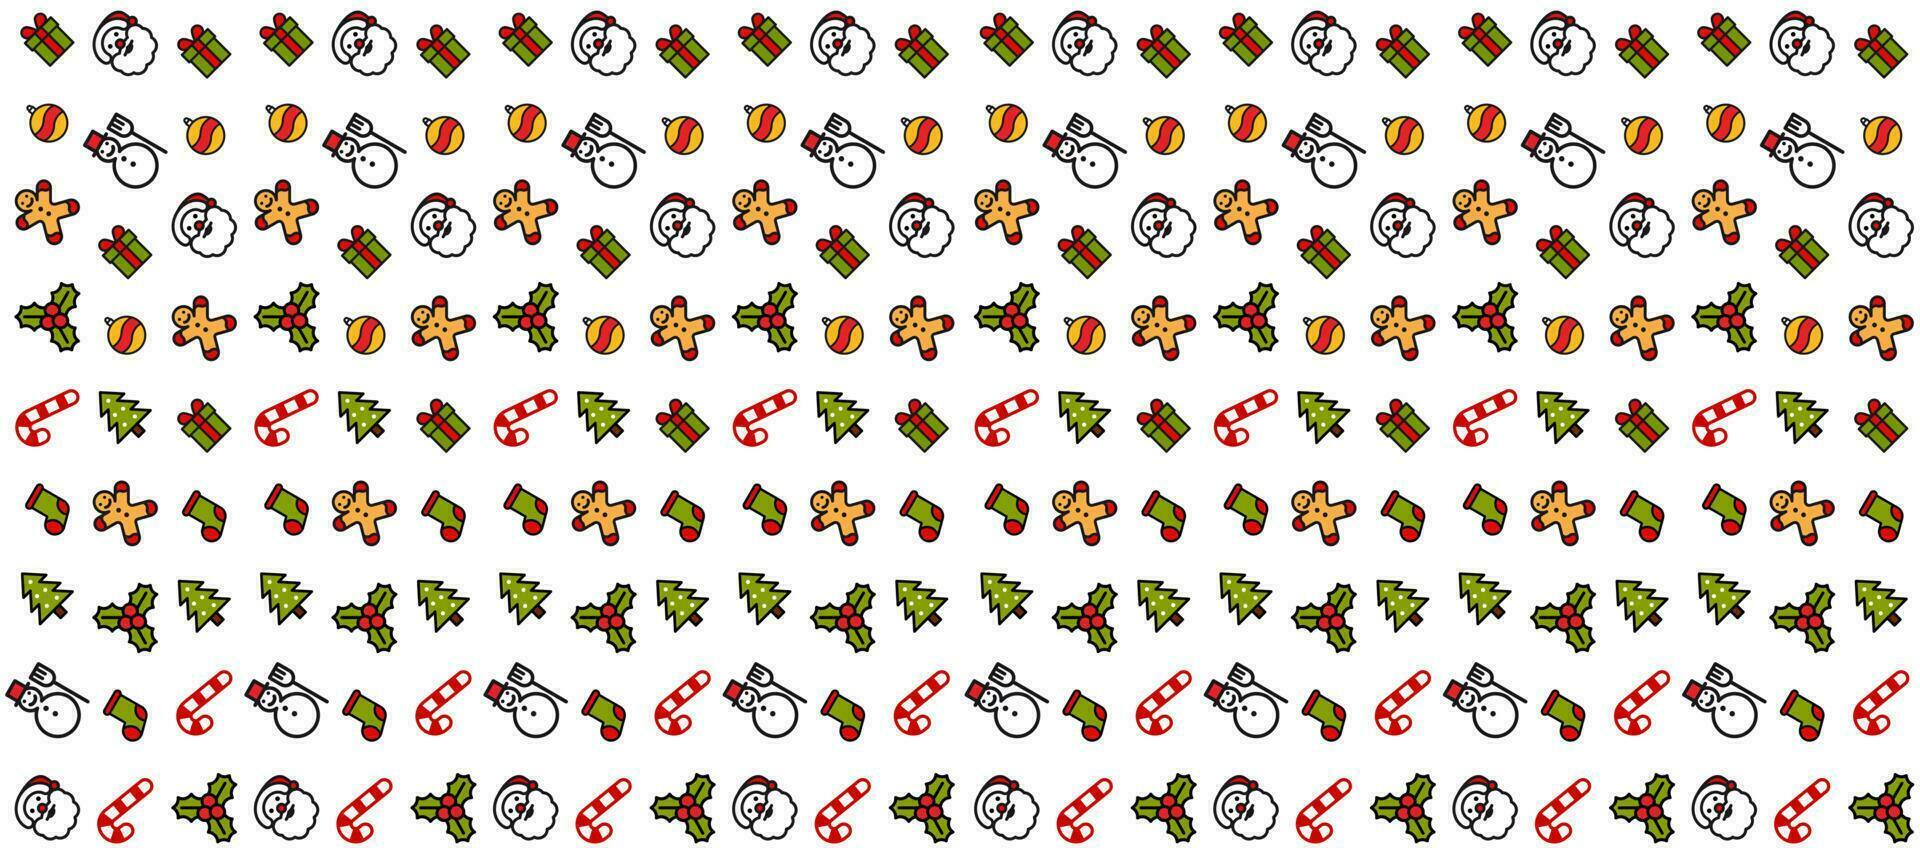 Christmas pattern Design 229 wallpaper background vector